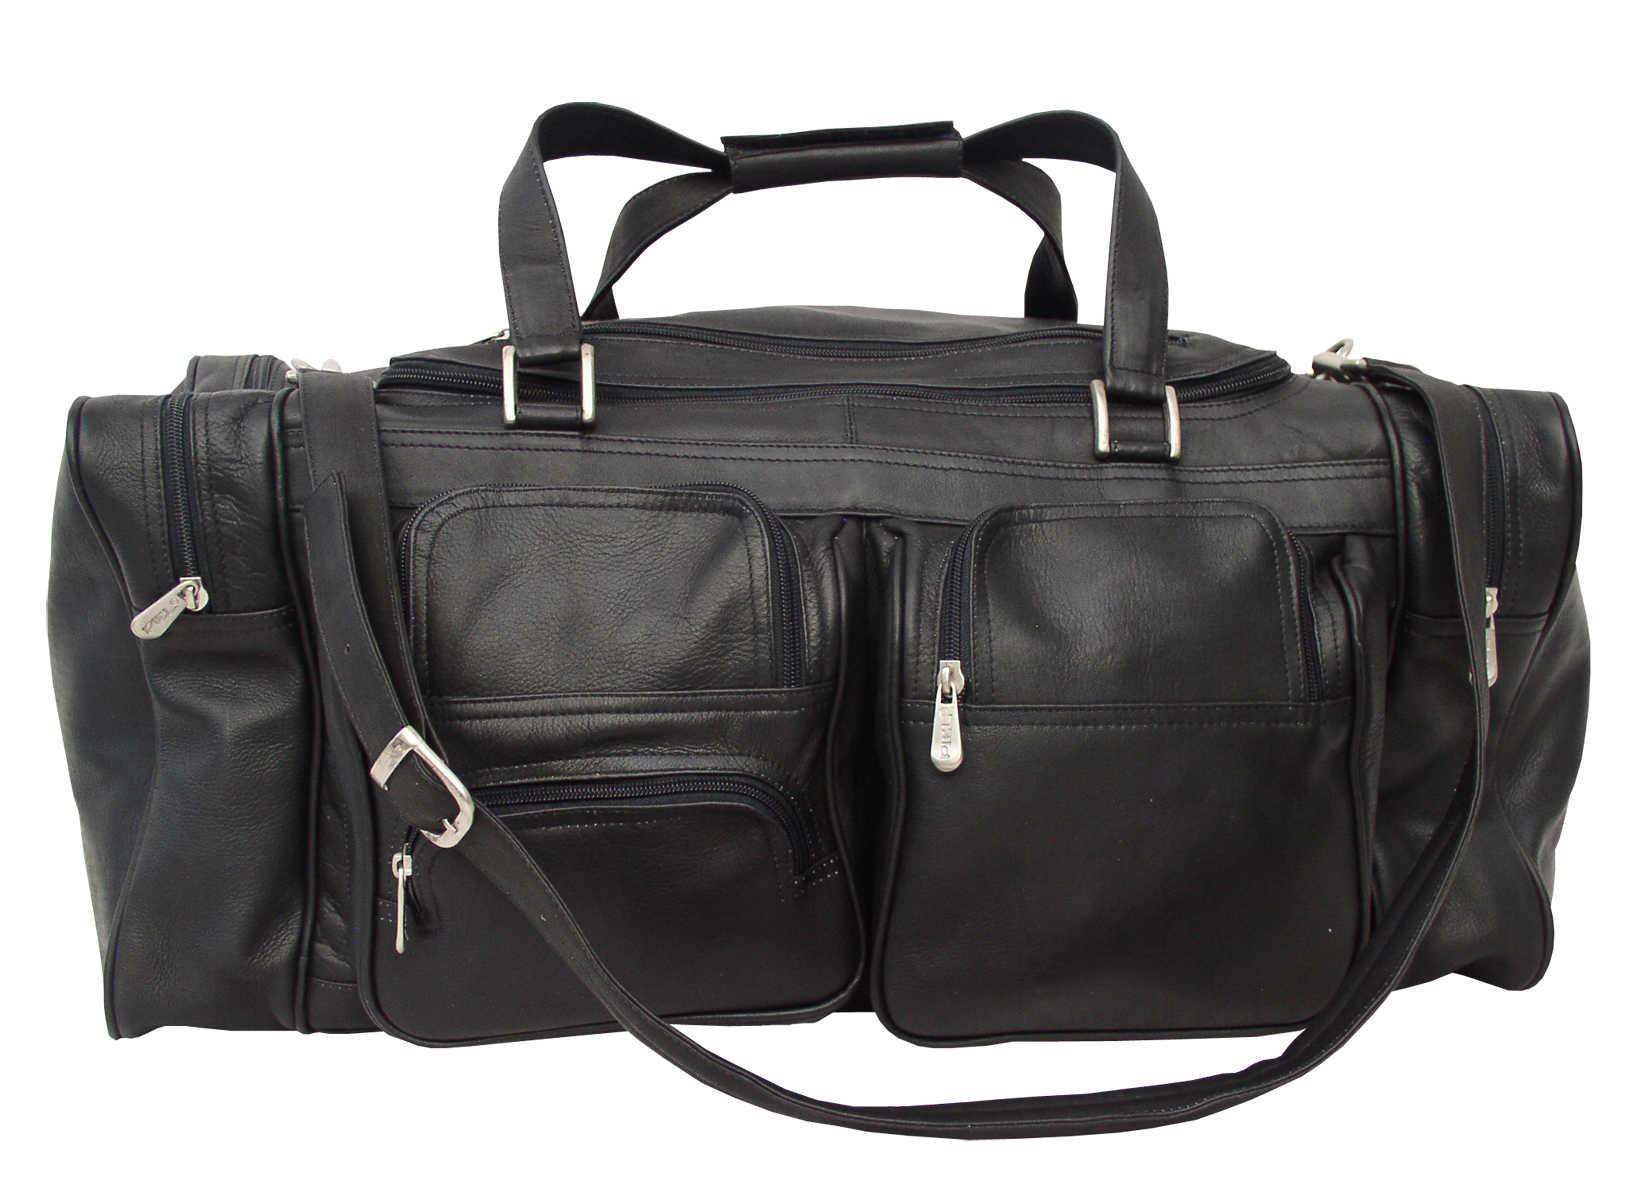 Journey – Leather Travel Luggage Duffel Bag, Chocolate